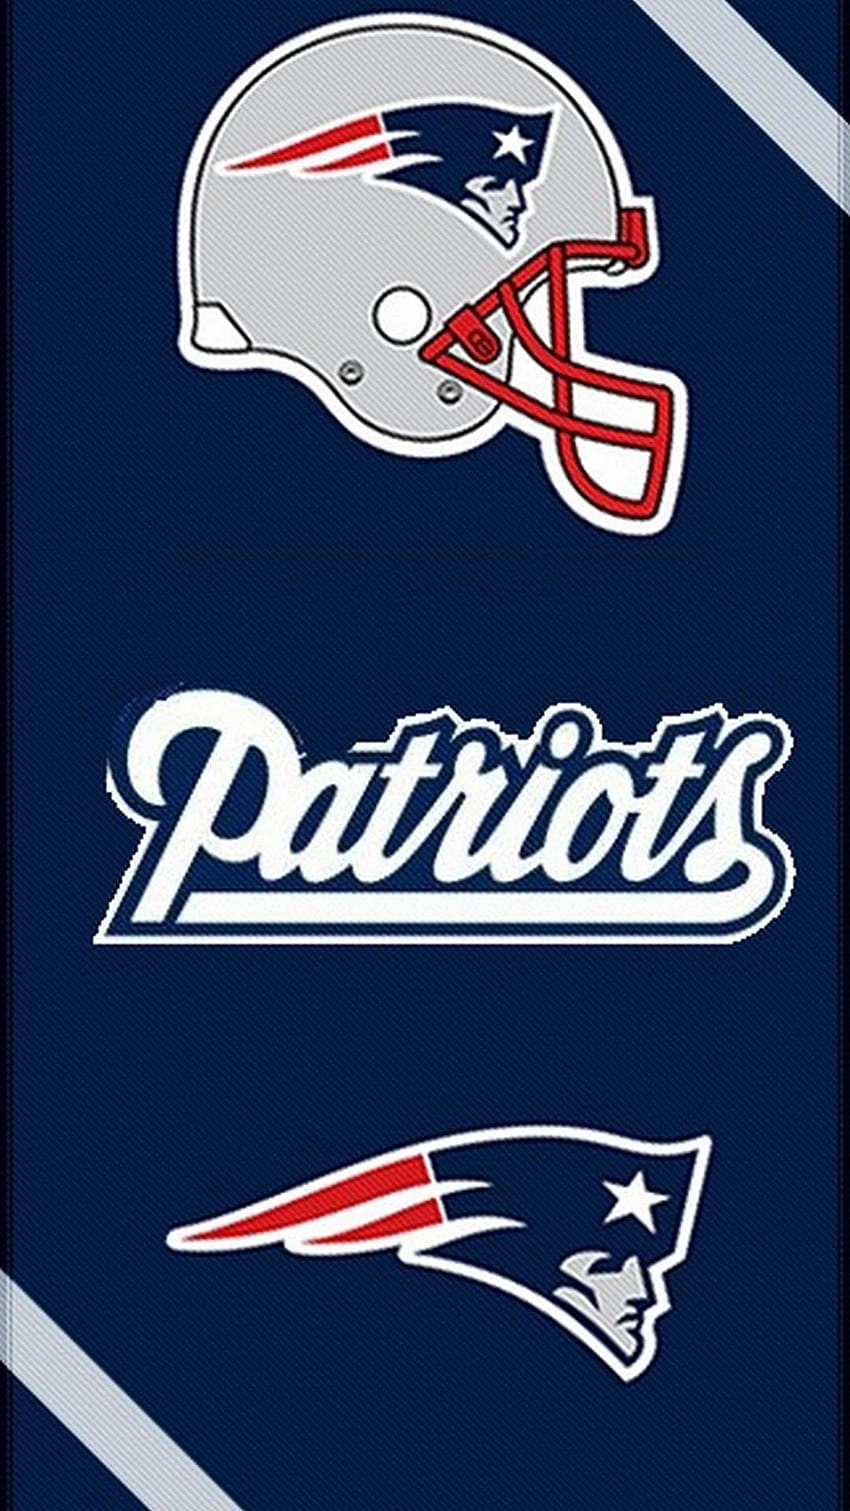 England Patriots Wallpaper iPhone 6S by lirking20 on DeviantArt